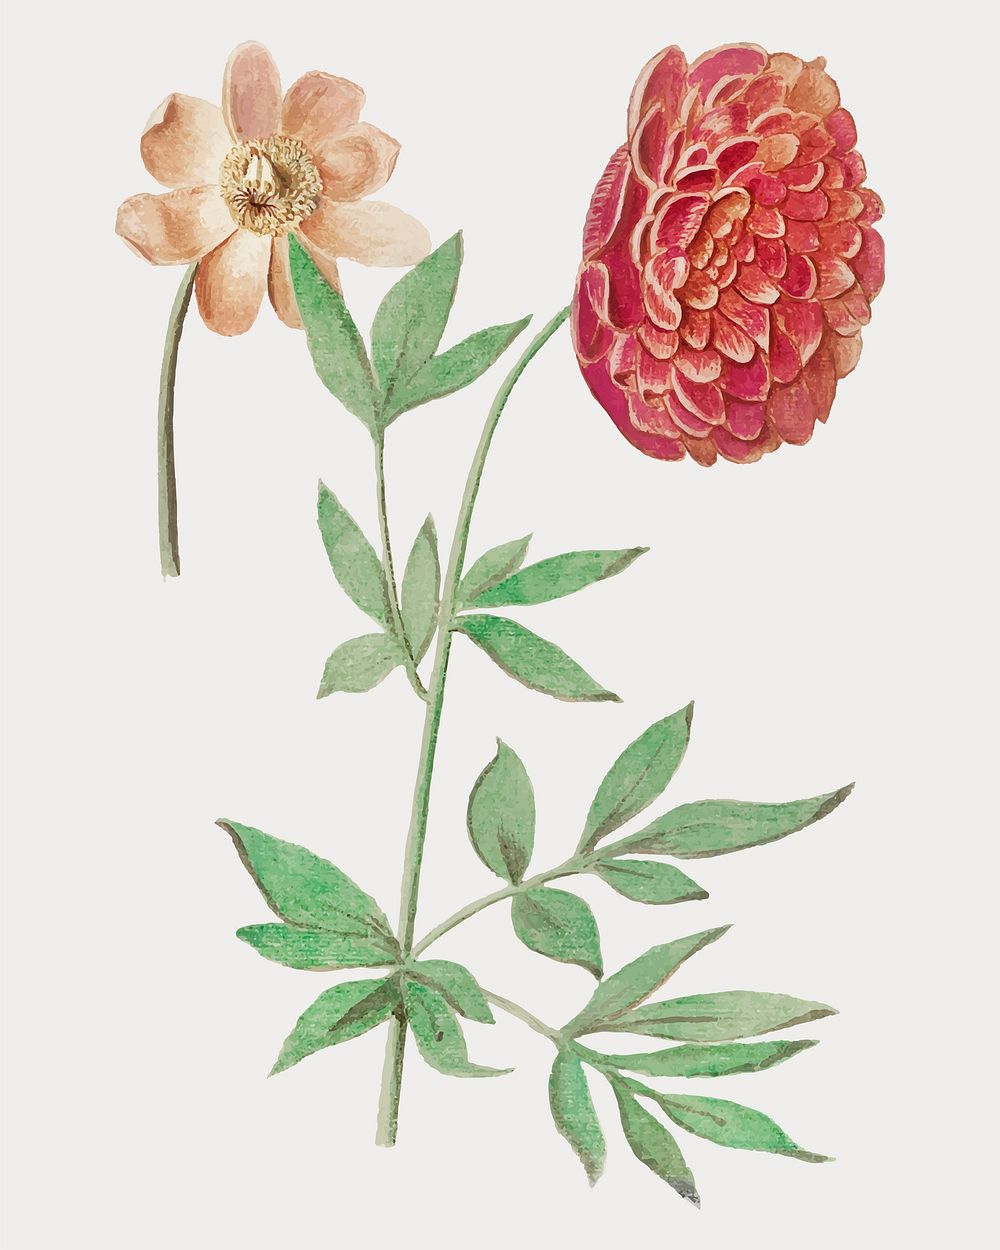 Vintage peony flower illustration in vector